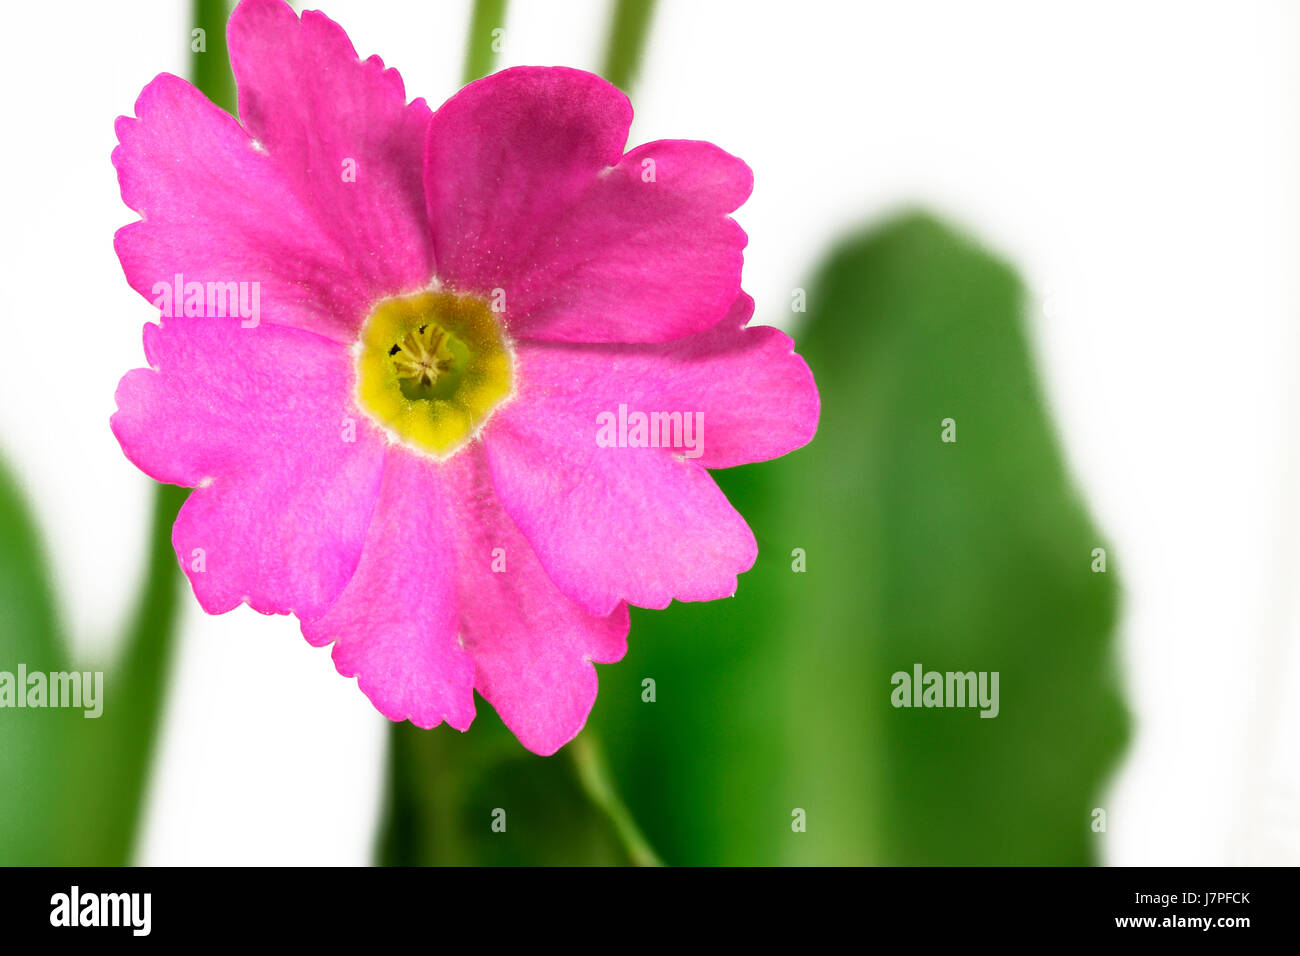 flower plant bloom blossom flourish flourishing pink macro close-up macro Stock Photo